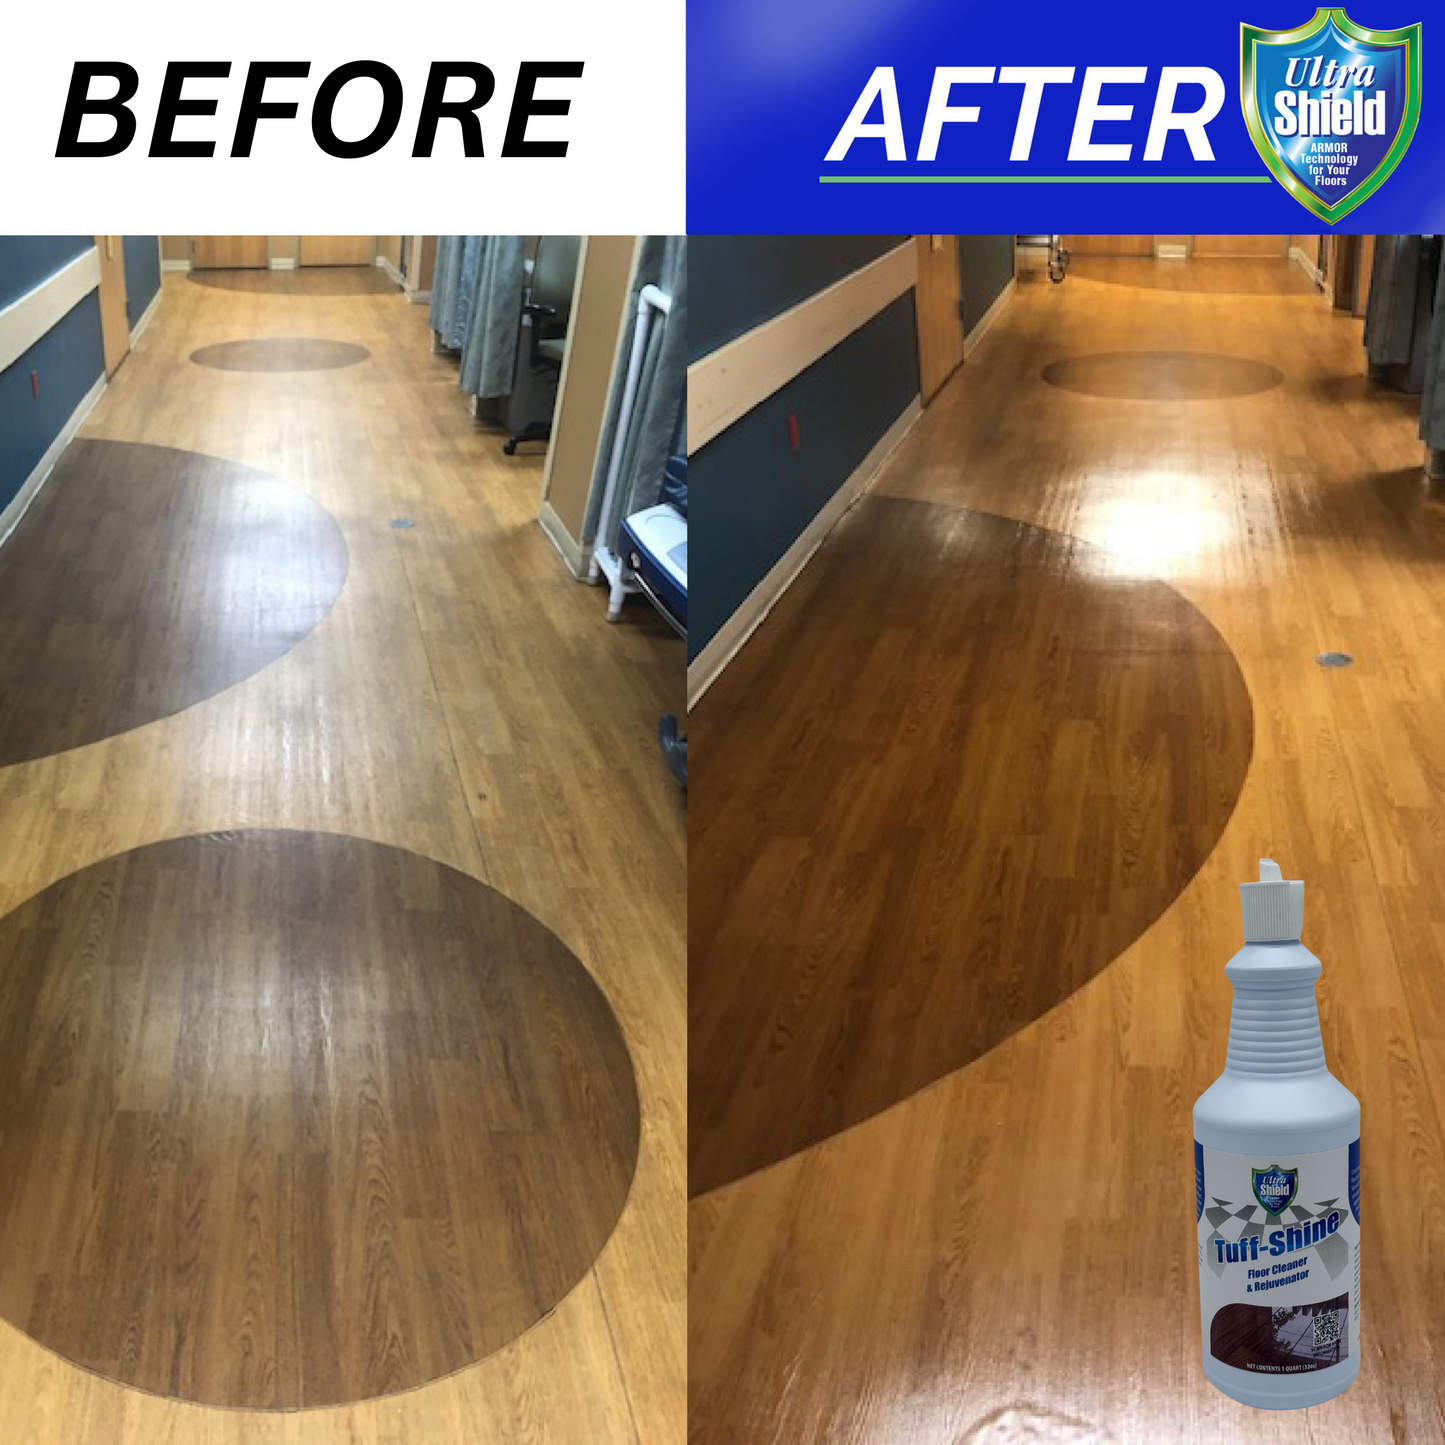 ULTRA SHIELD Tuff-Shine - Clean Enhance and Protects Multi Surface Cleaner - Wood Floor Cleaner and Polish, Vinyl Floor Cleaner, Rejuvenate Floor, Laminate Floor Polish 32oz